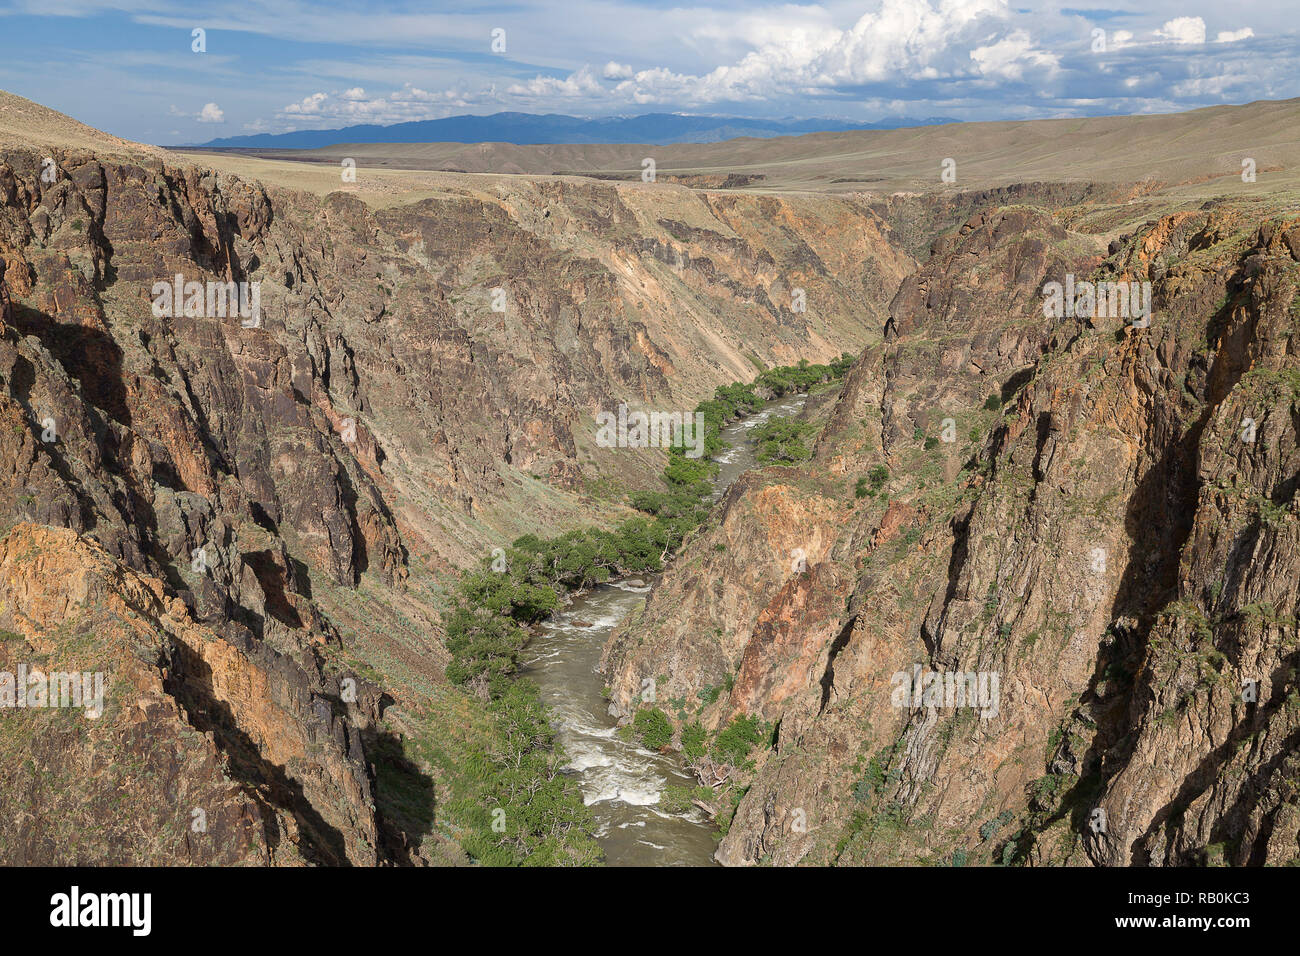 Il canyon del fiume Charyn noto come Black Canyon, in Kazakistan. Foto Stock